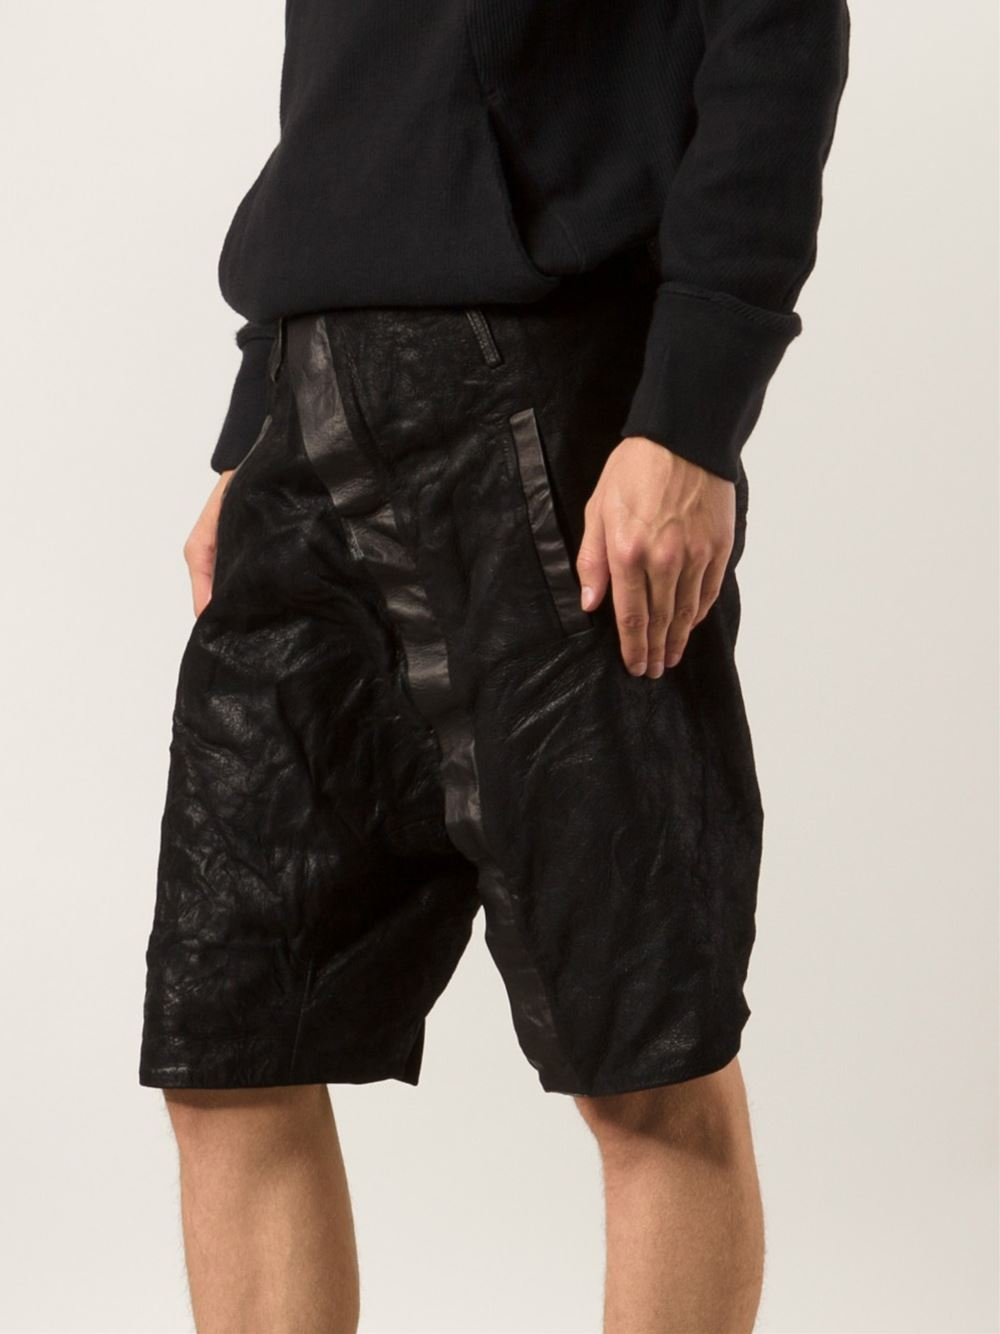 Boris Bidjan Saberi Leather Shorts in Black for Men - Lyst